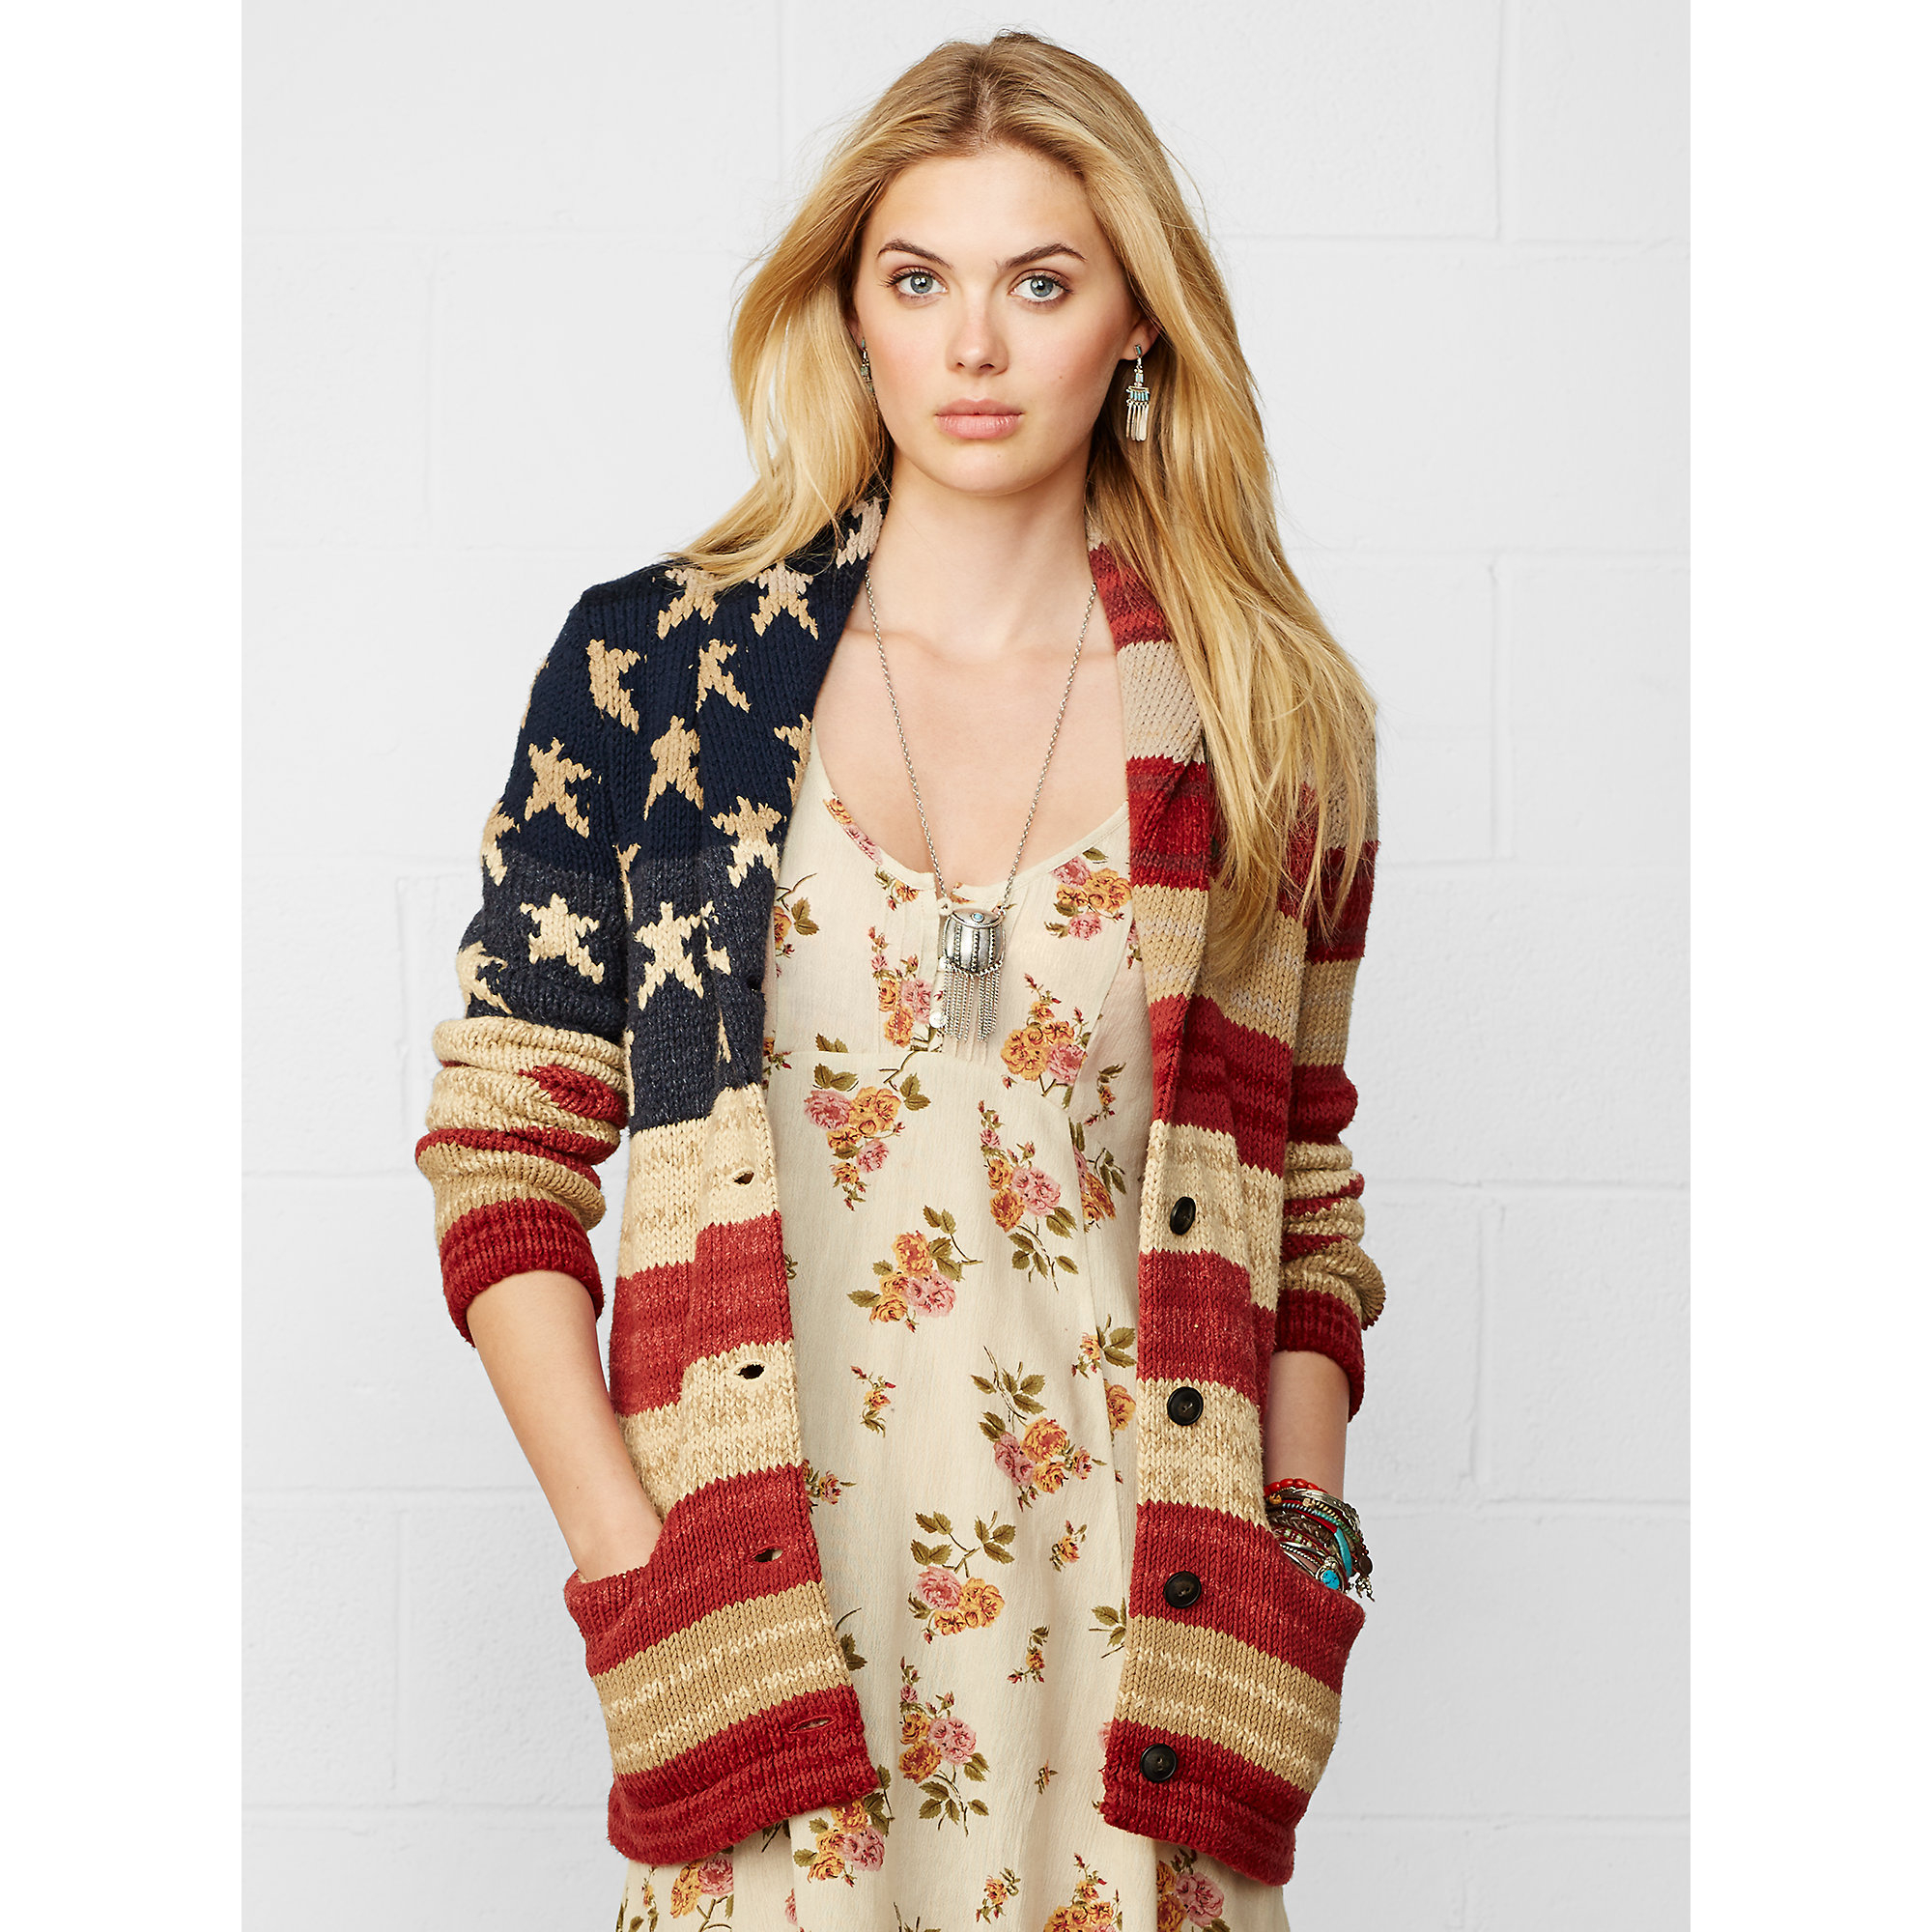 https://cdna.lystit.com/photos/6359-2014/10/21/denim-supply-red-american-flag-shawl-cardigan-product-1-24413101-2-873917485-normal.jpeg